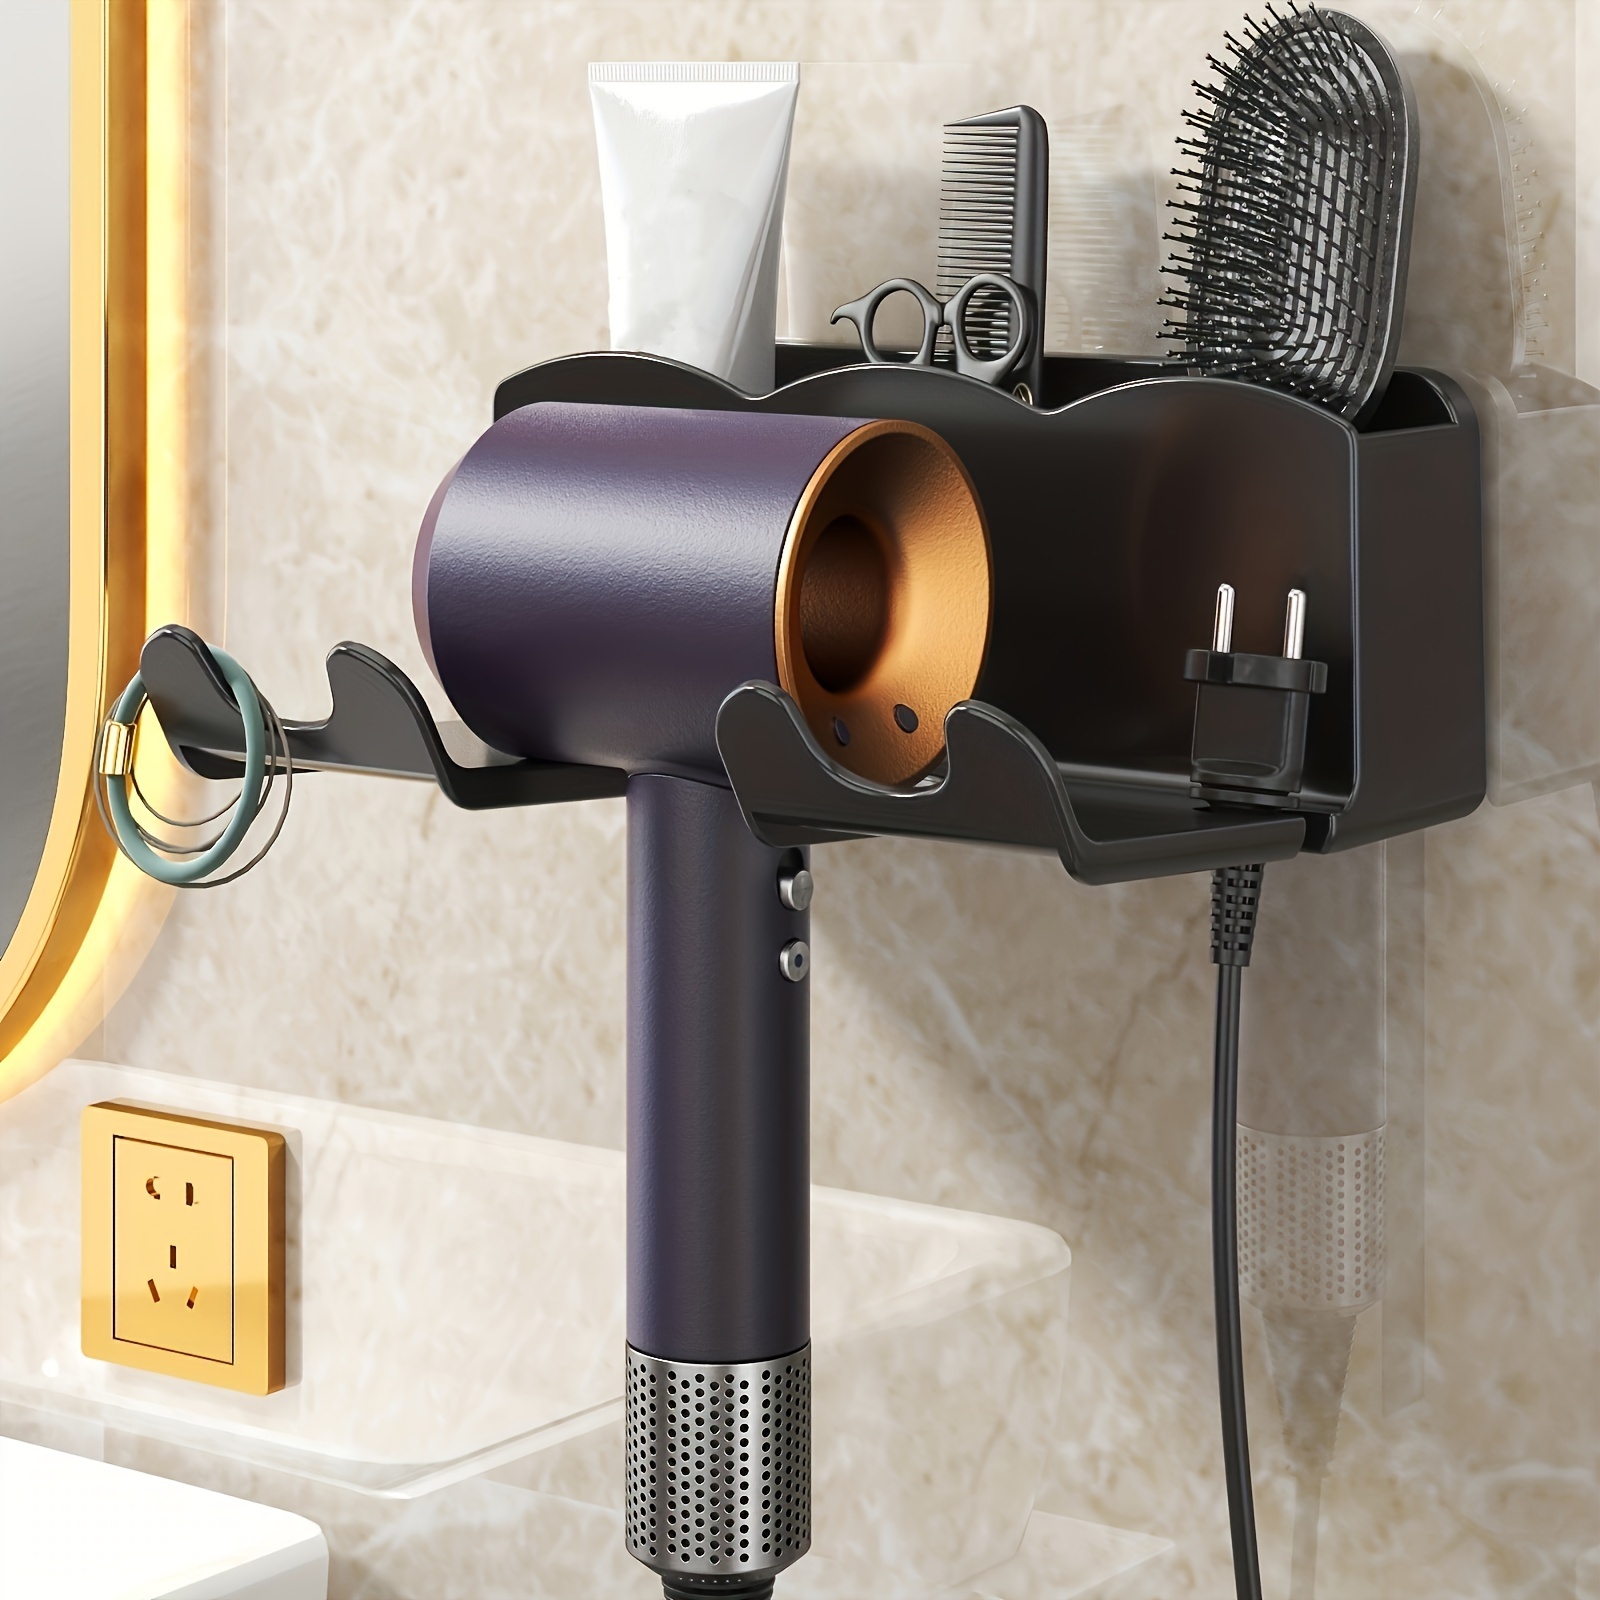 TreeLen Hair Dryer Holder Organizer Bathroom Styling Tool Appliance St